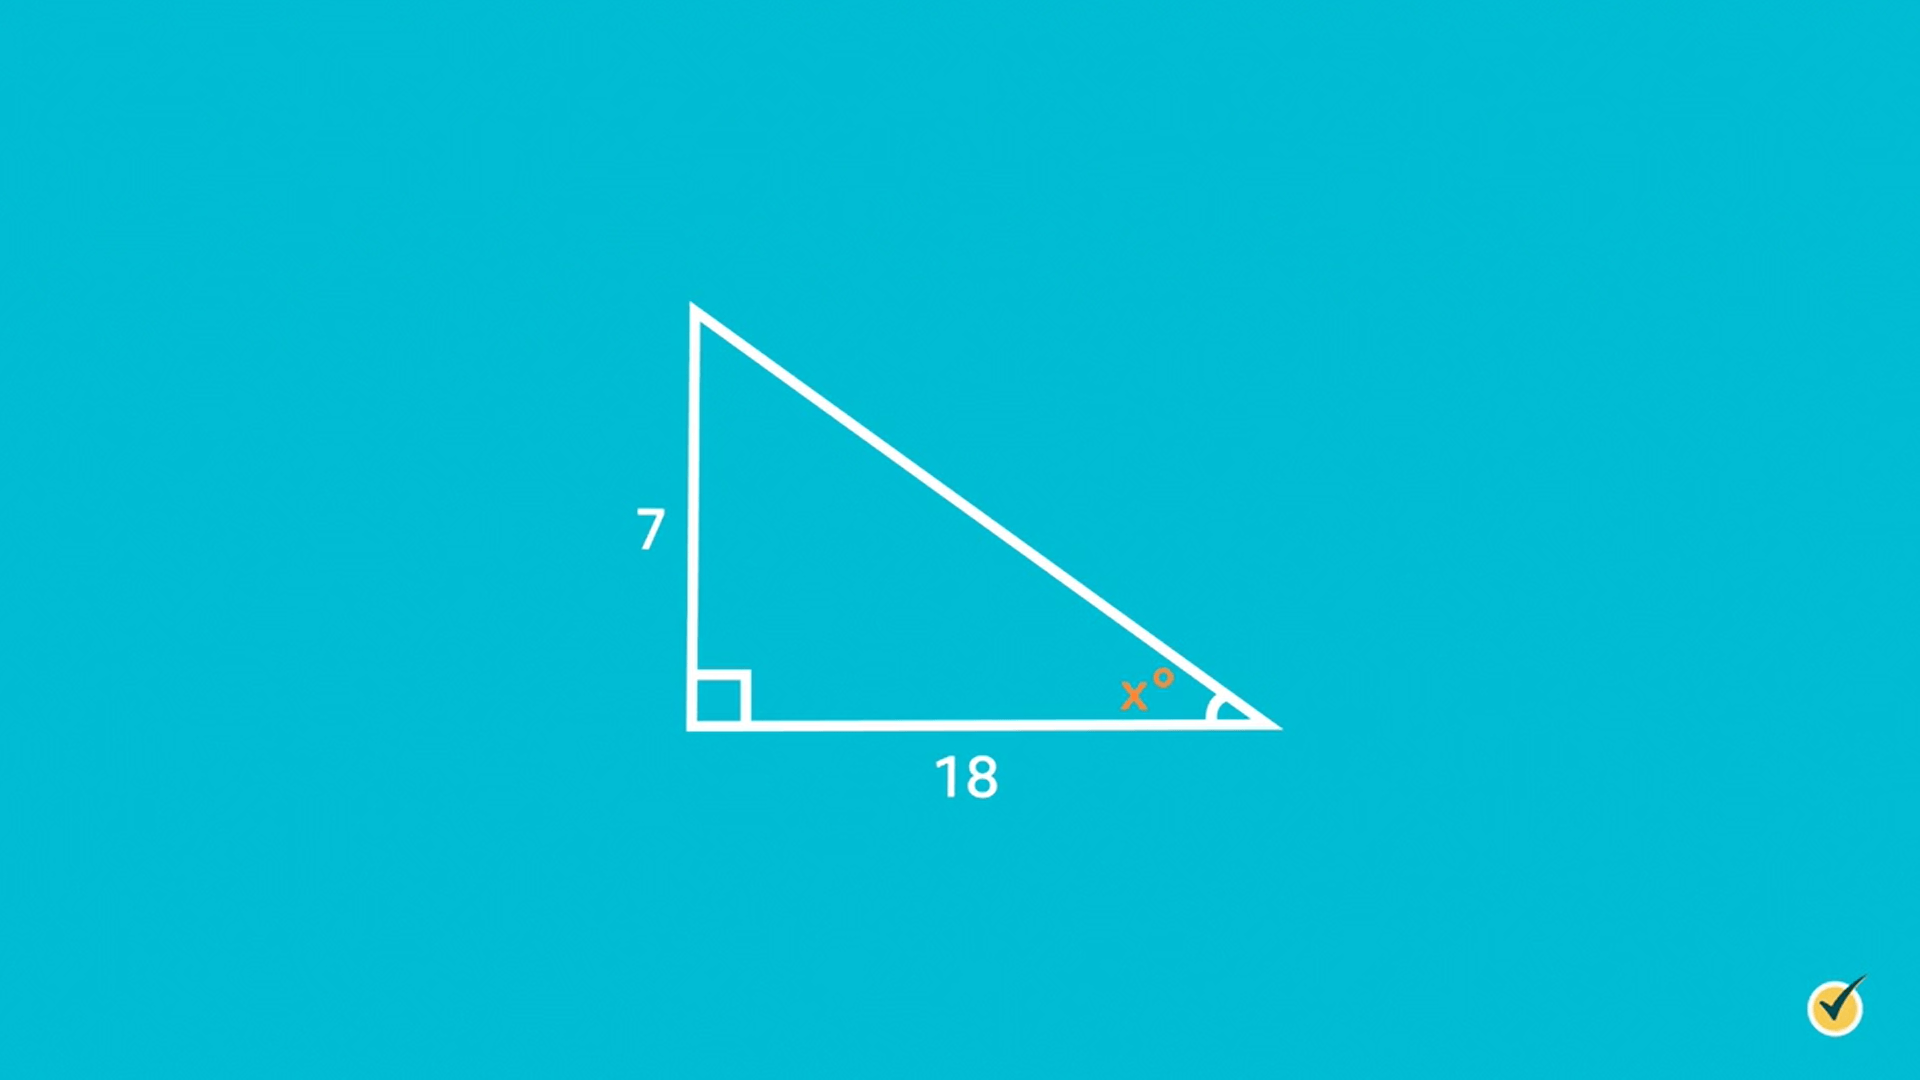 right triangle, left side 7, bottom side 18, bottom left angle marked with a square, bottom right angle marked x degrees